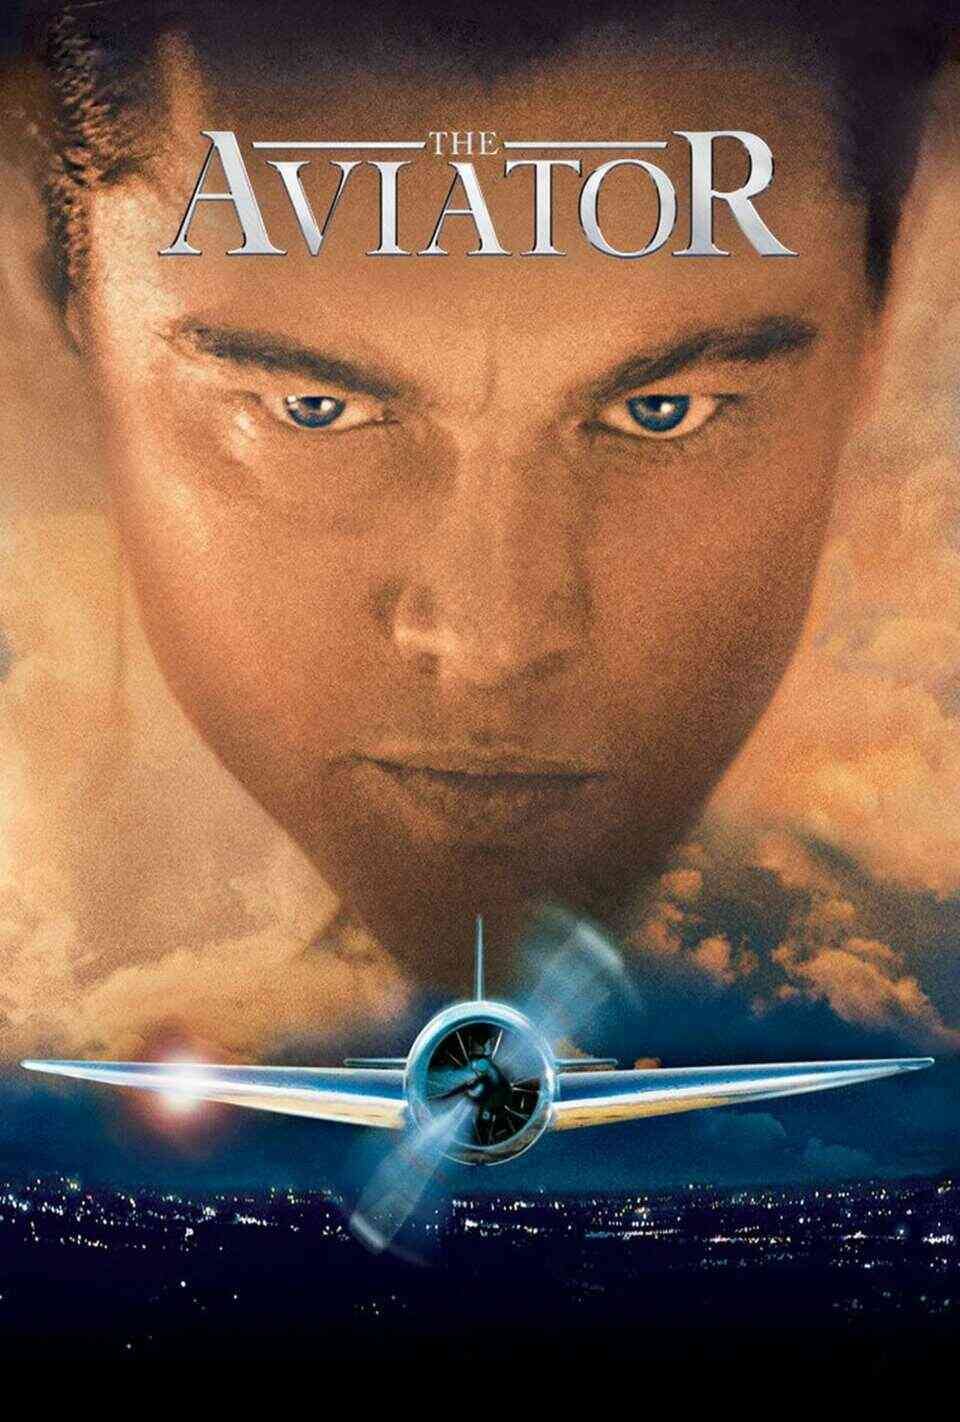 Read The Aviator screenplay.